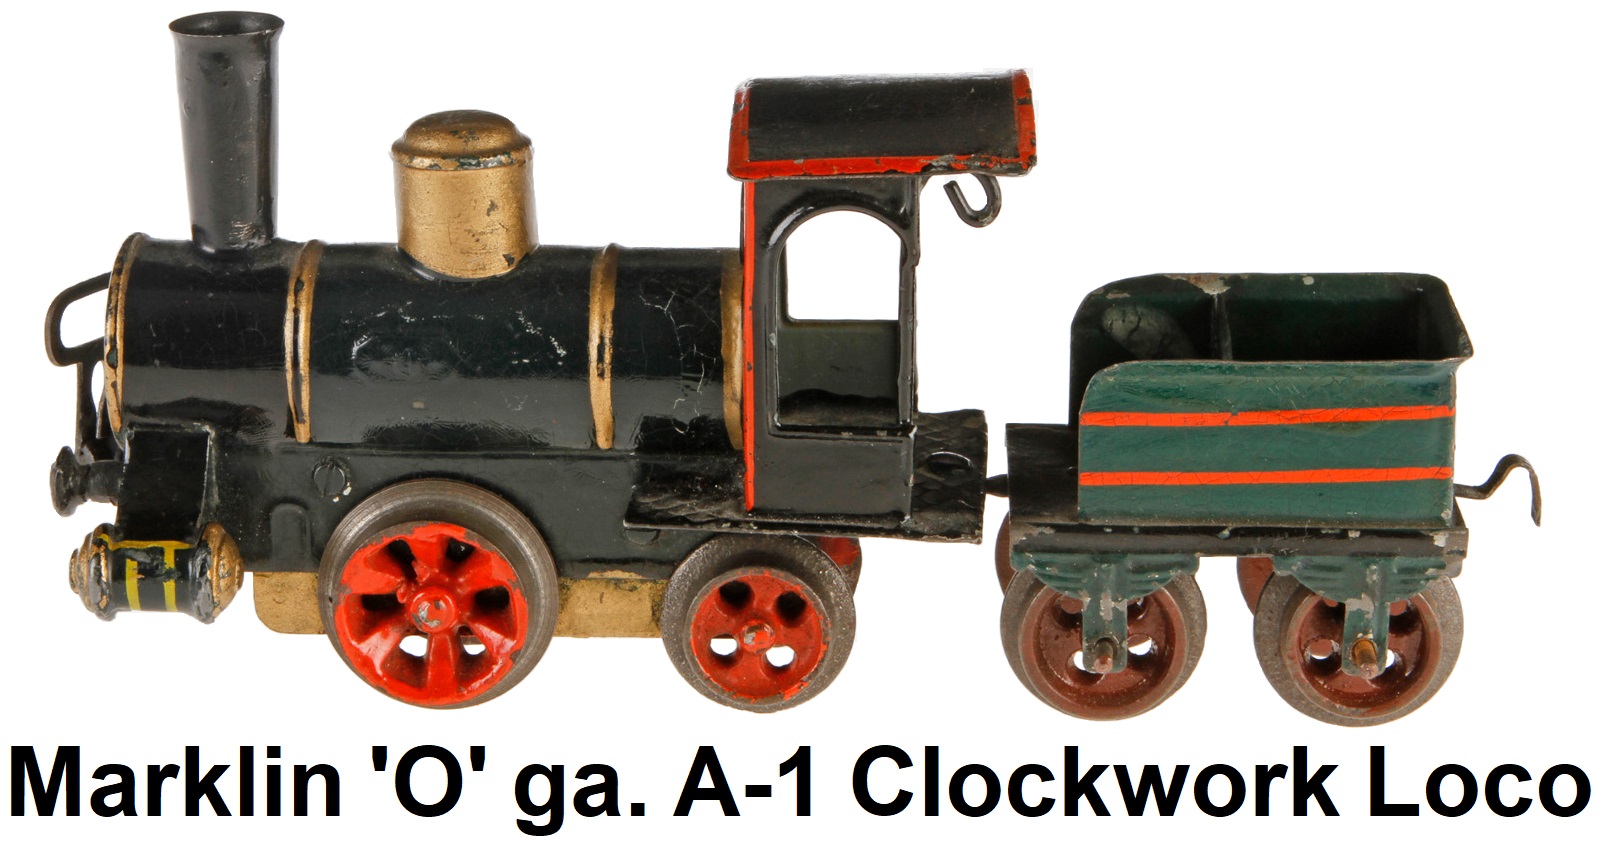 Märklin 'O' gauge A-1 Steam locomotive with 2A tender 1020, clockwork